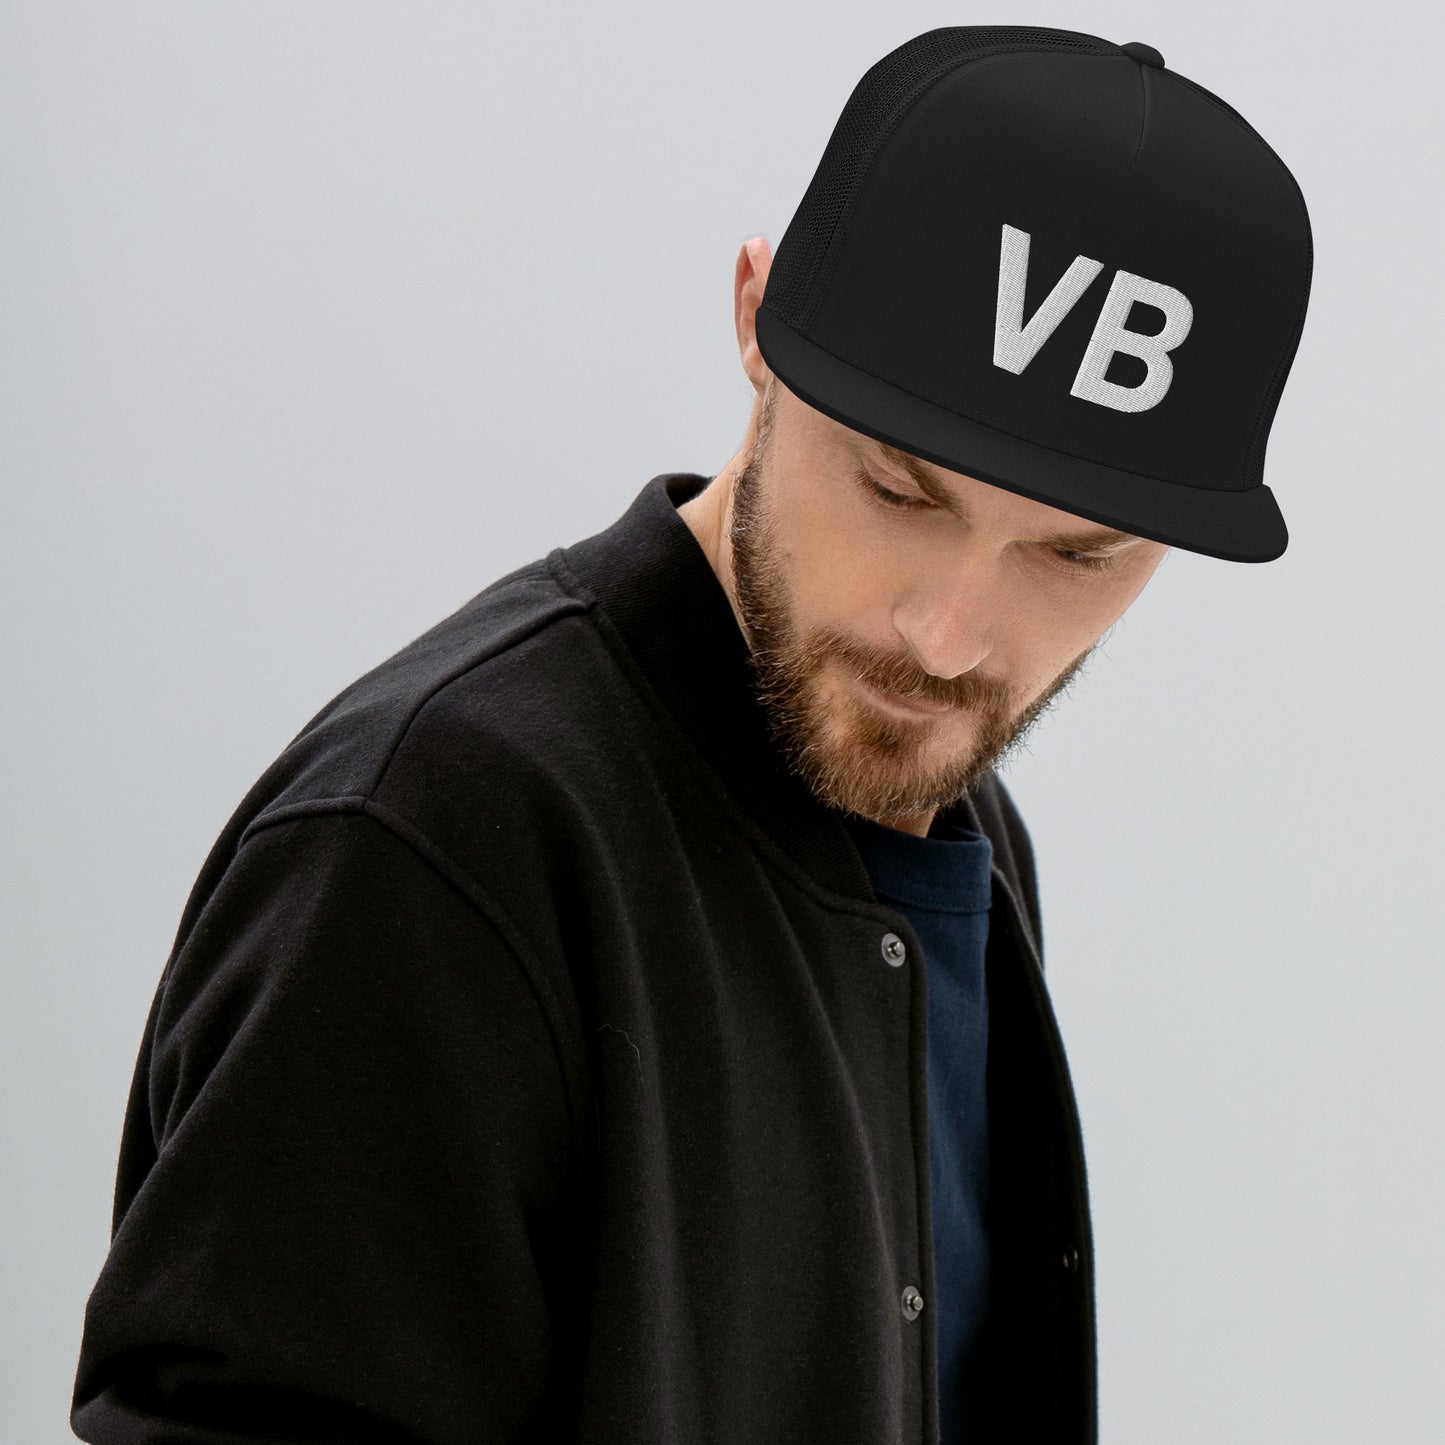 VB Trucker Hat